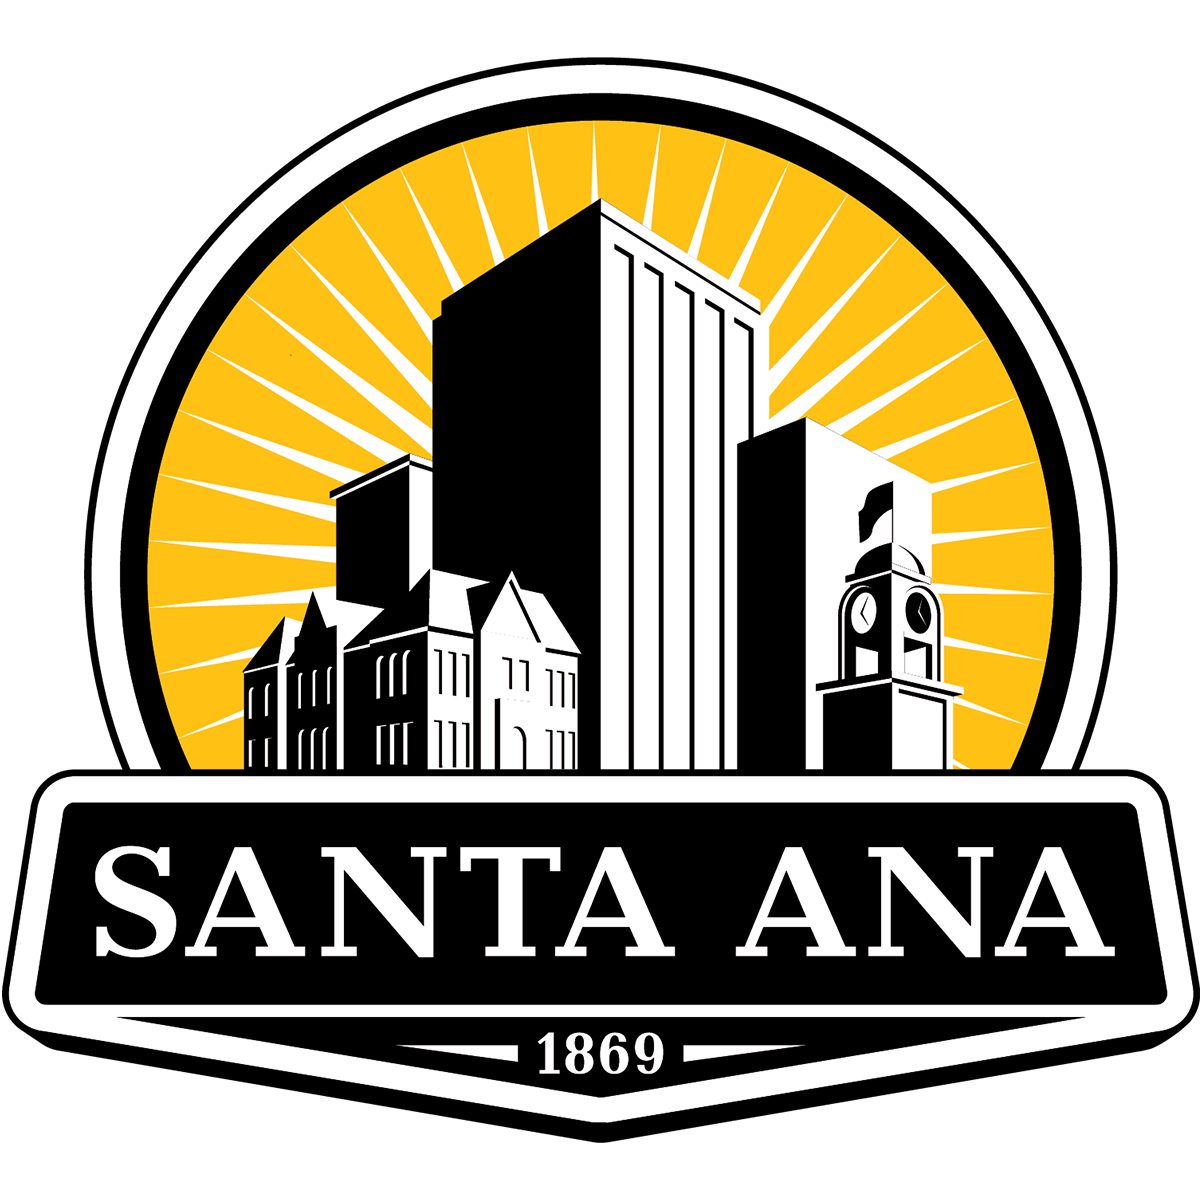 City logo with no motto